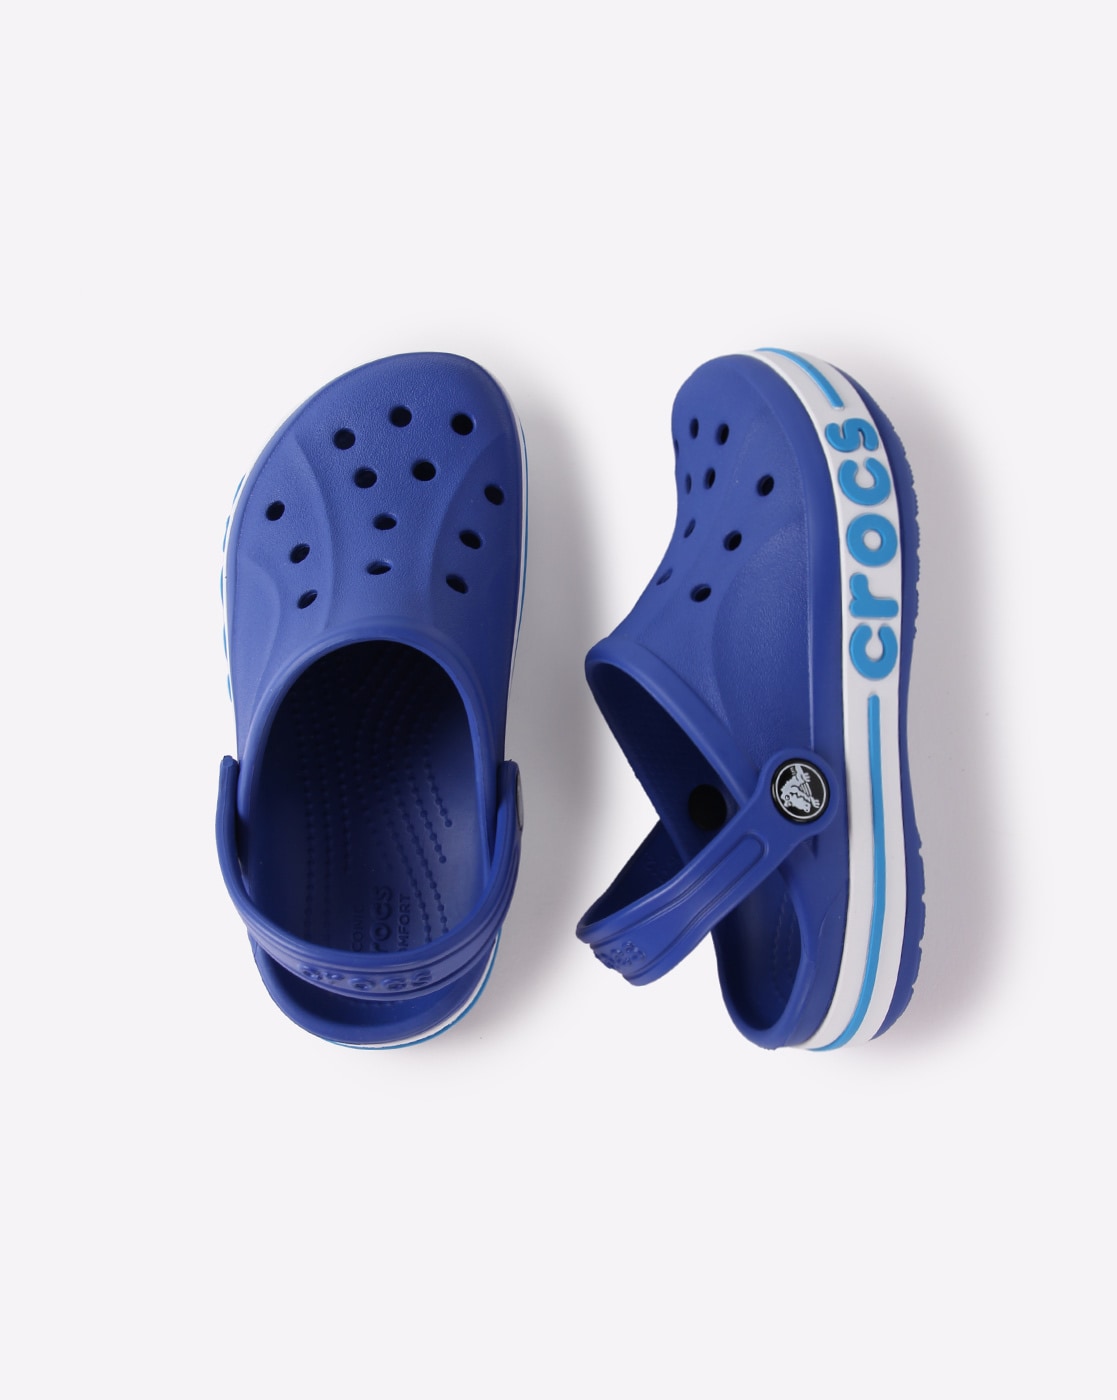 royal blue crocs